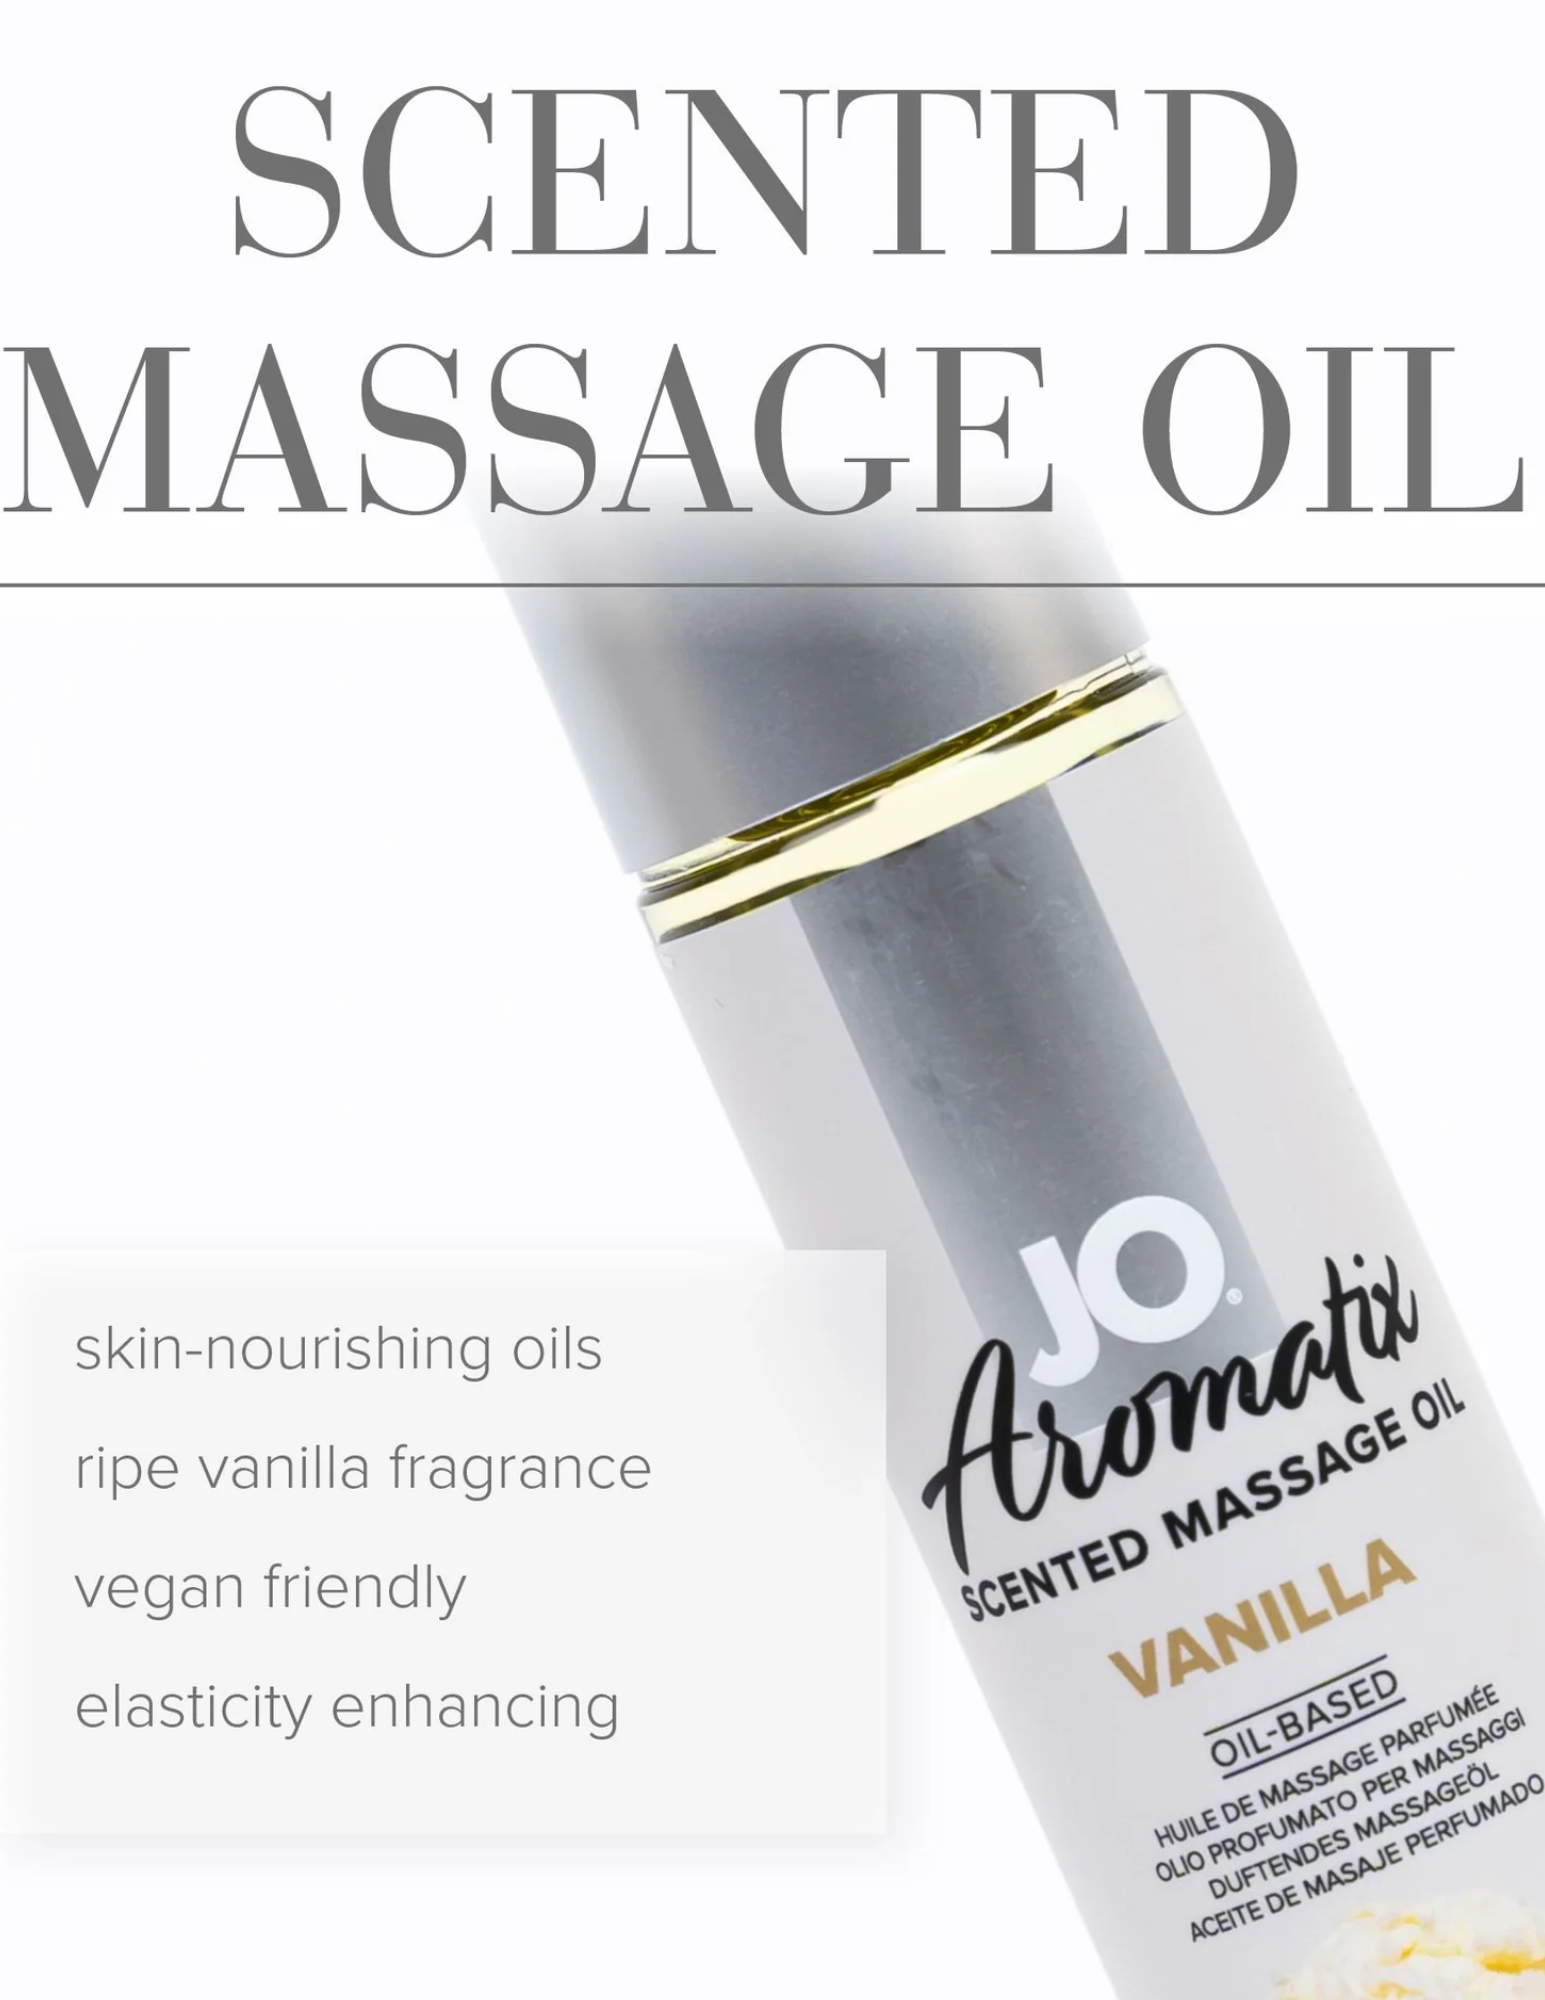 Ad for the System JO Aromatix Vanilla scented massage oil.